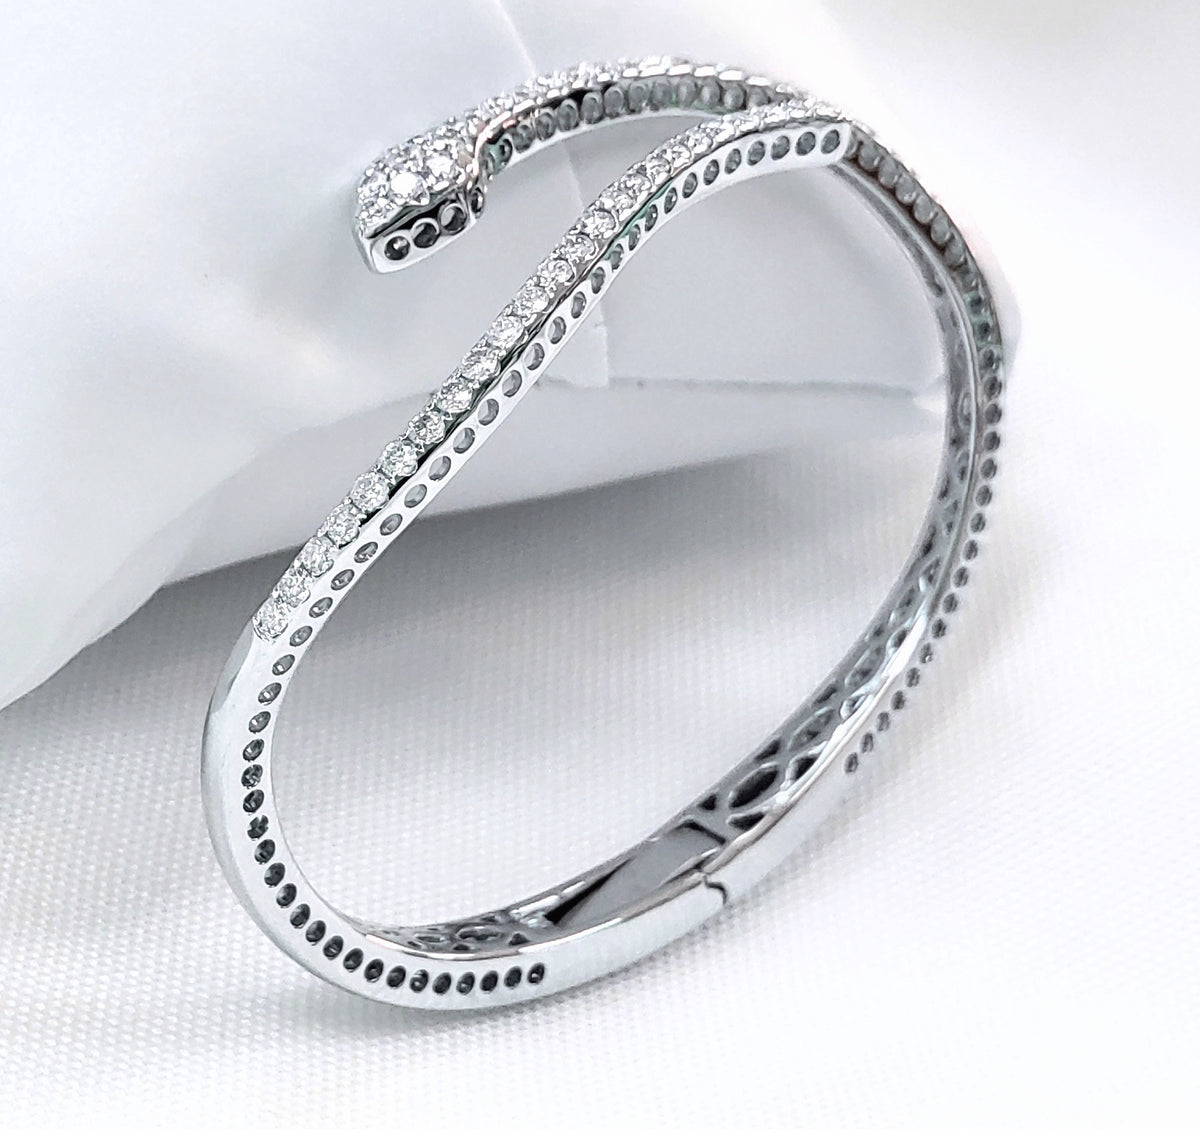 Diamond Cuff Bangle Bracelet in 18Kt White Gold